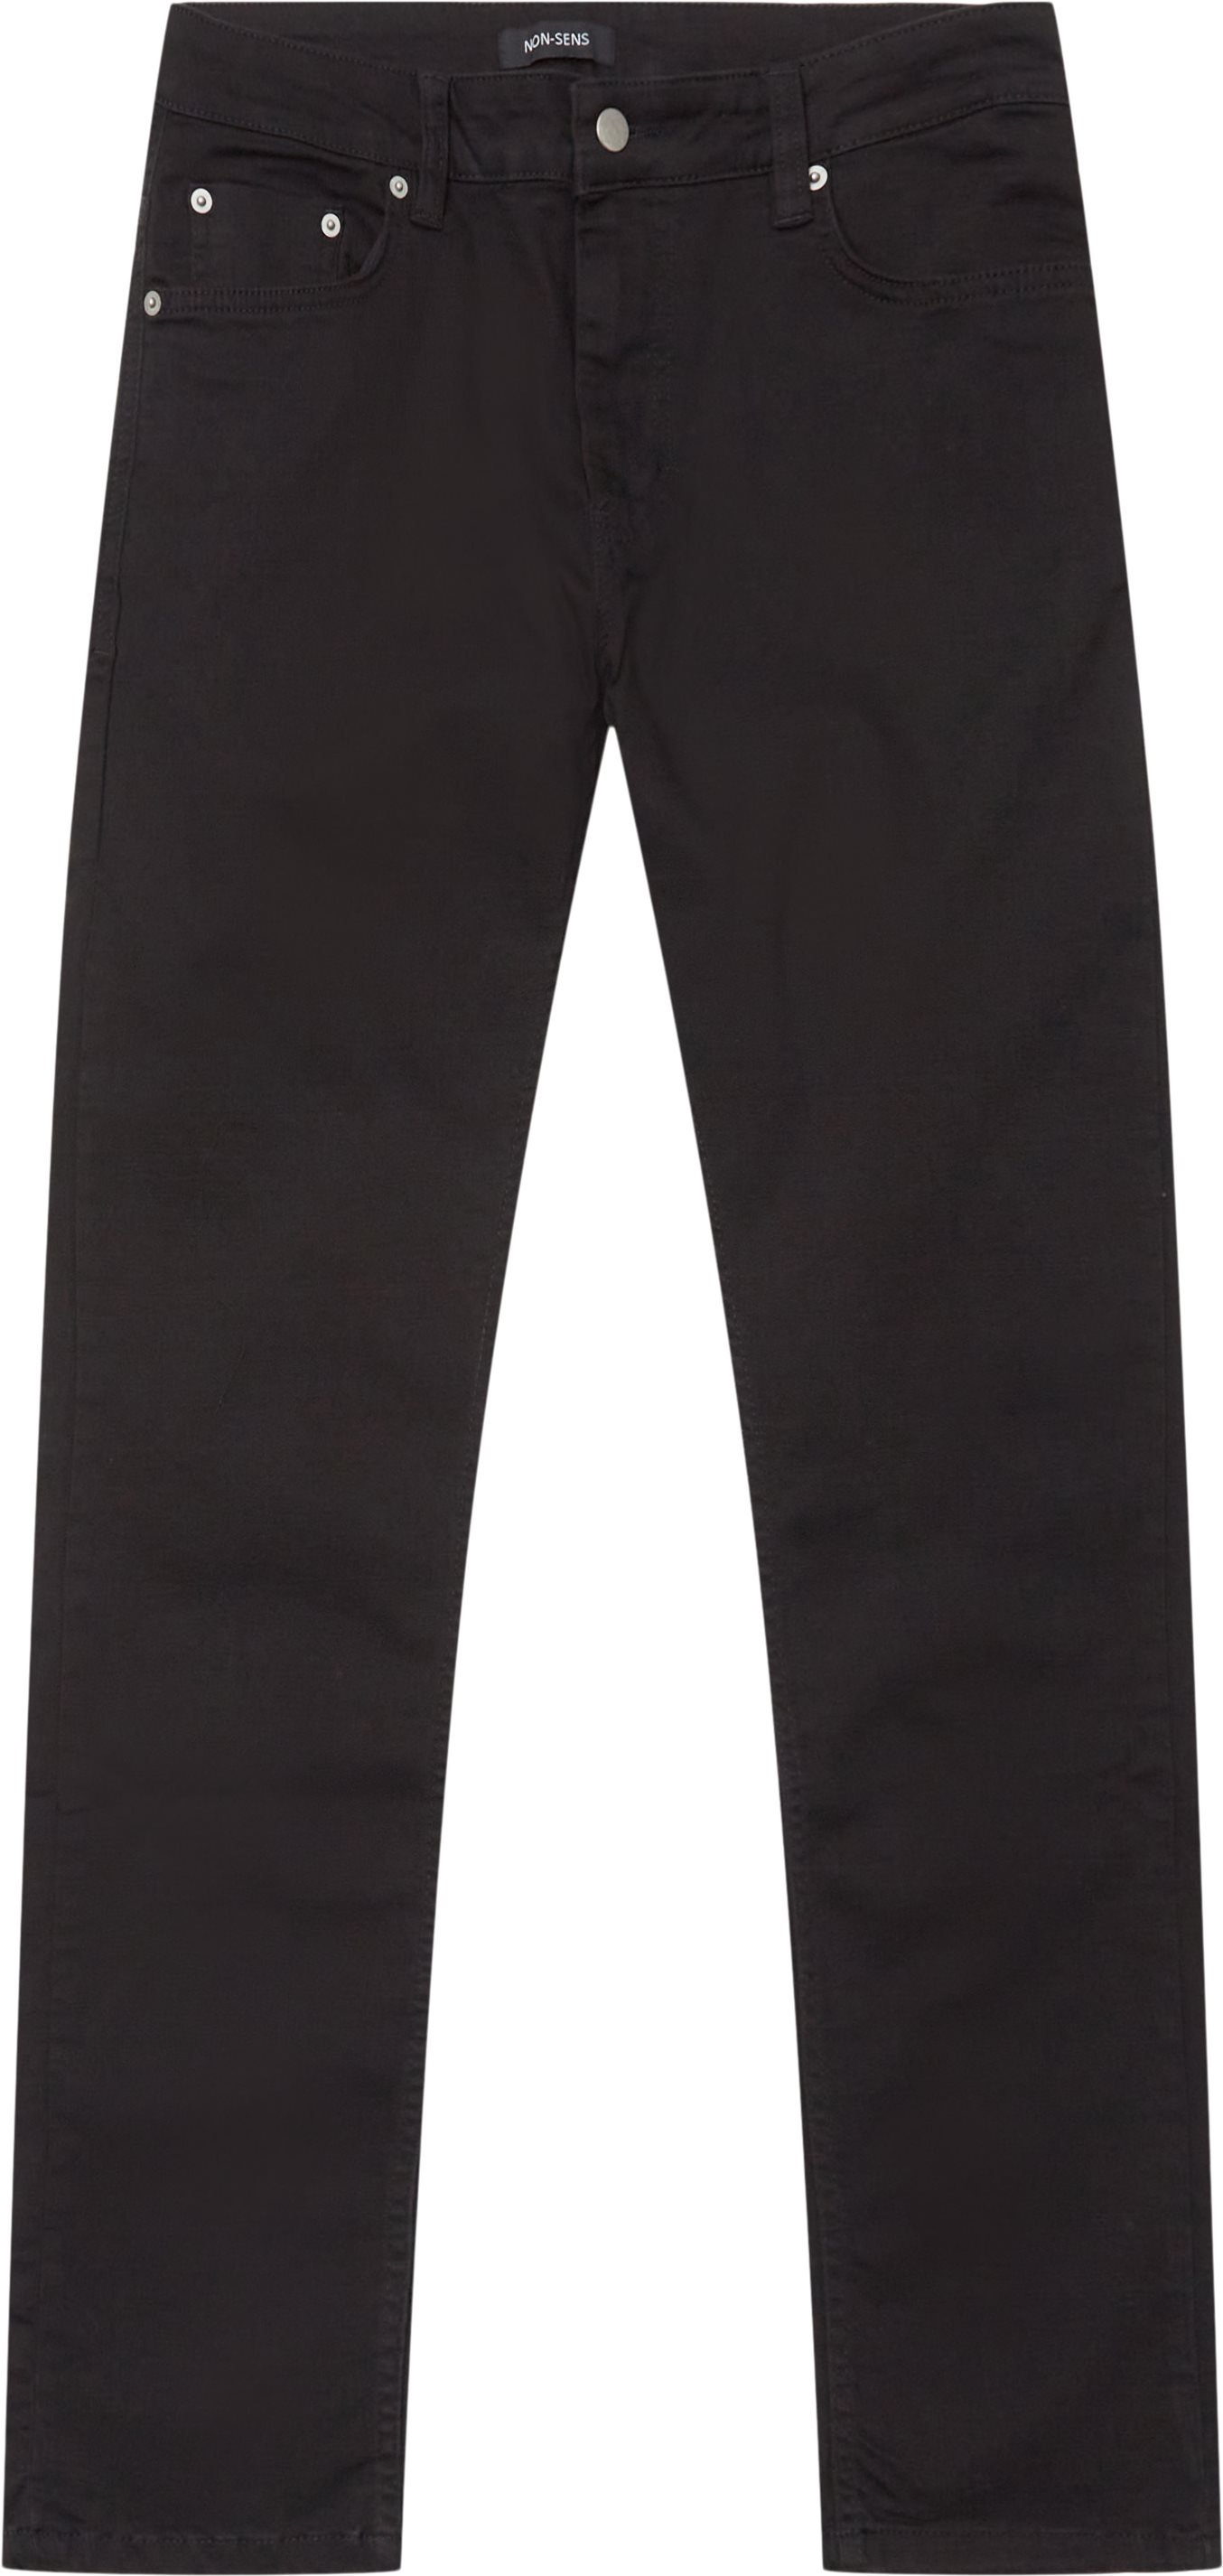 Jackson Jeans - Jeans - Slim fit - Sort